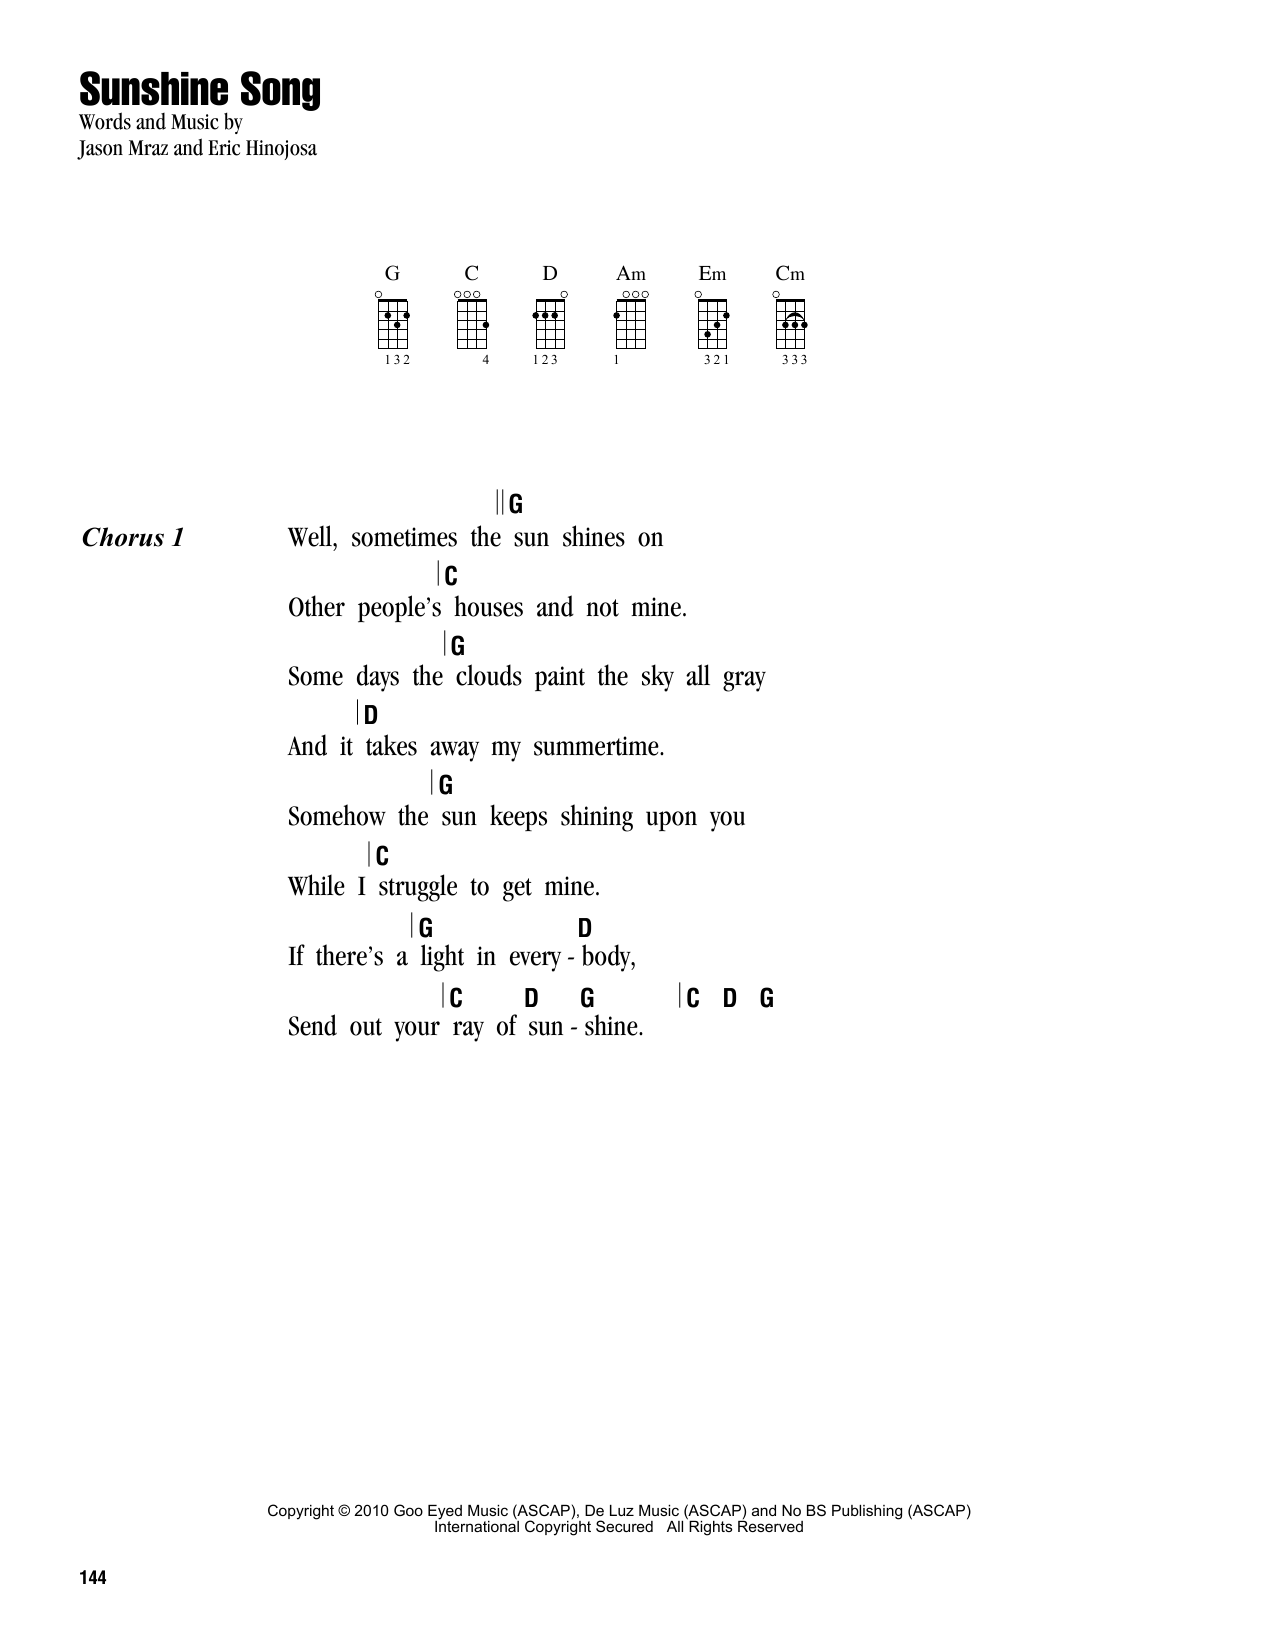 Jason Mraz Sunshine Song Sheet Music Notes & Chords for Ukulele with strumming patterns - Download or Print PDF